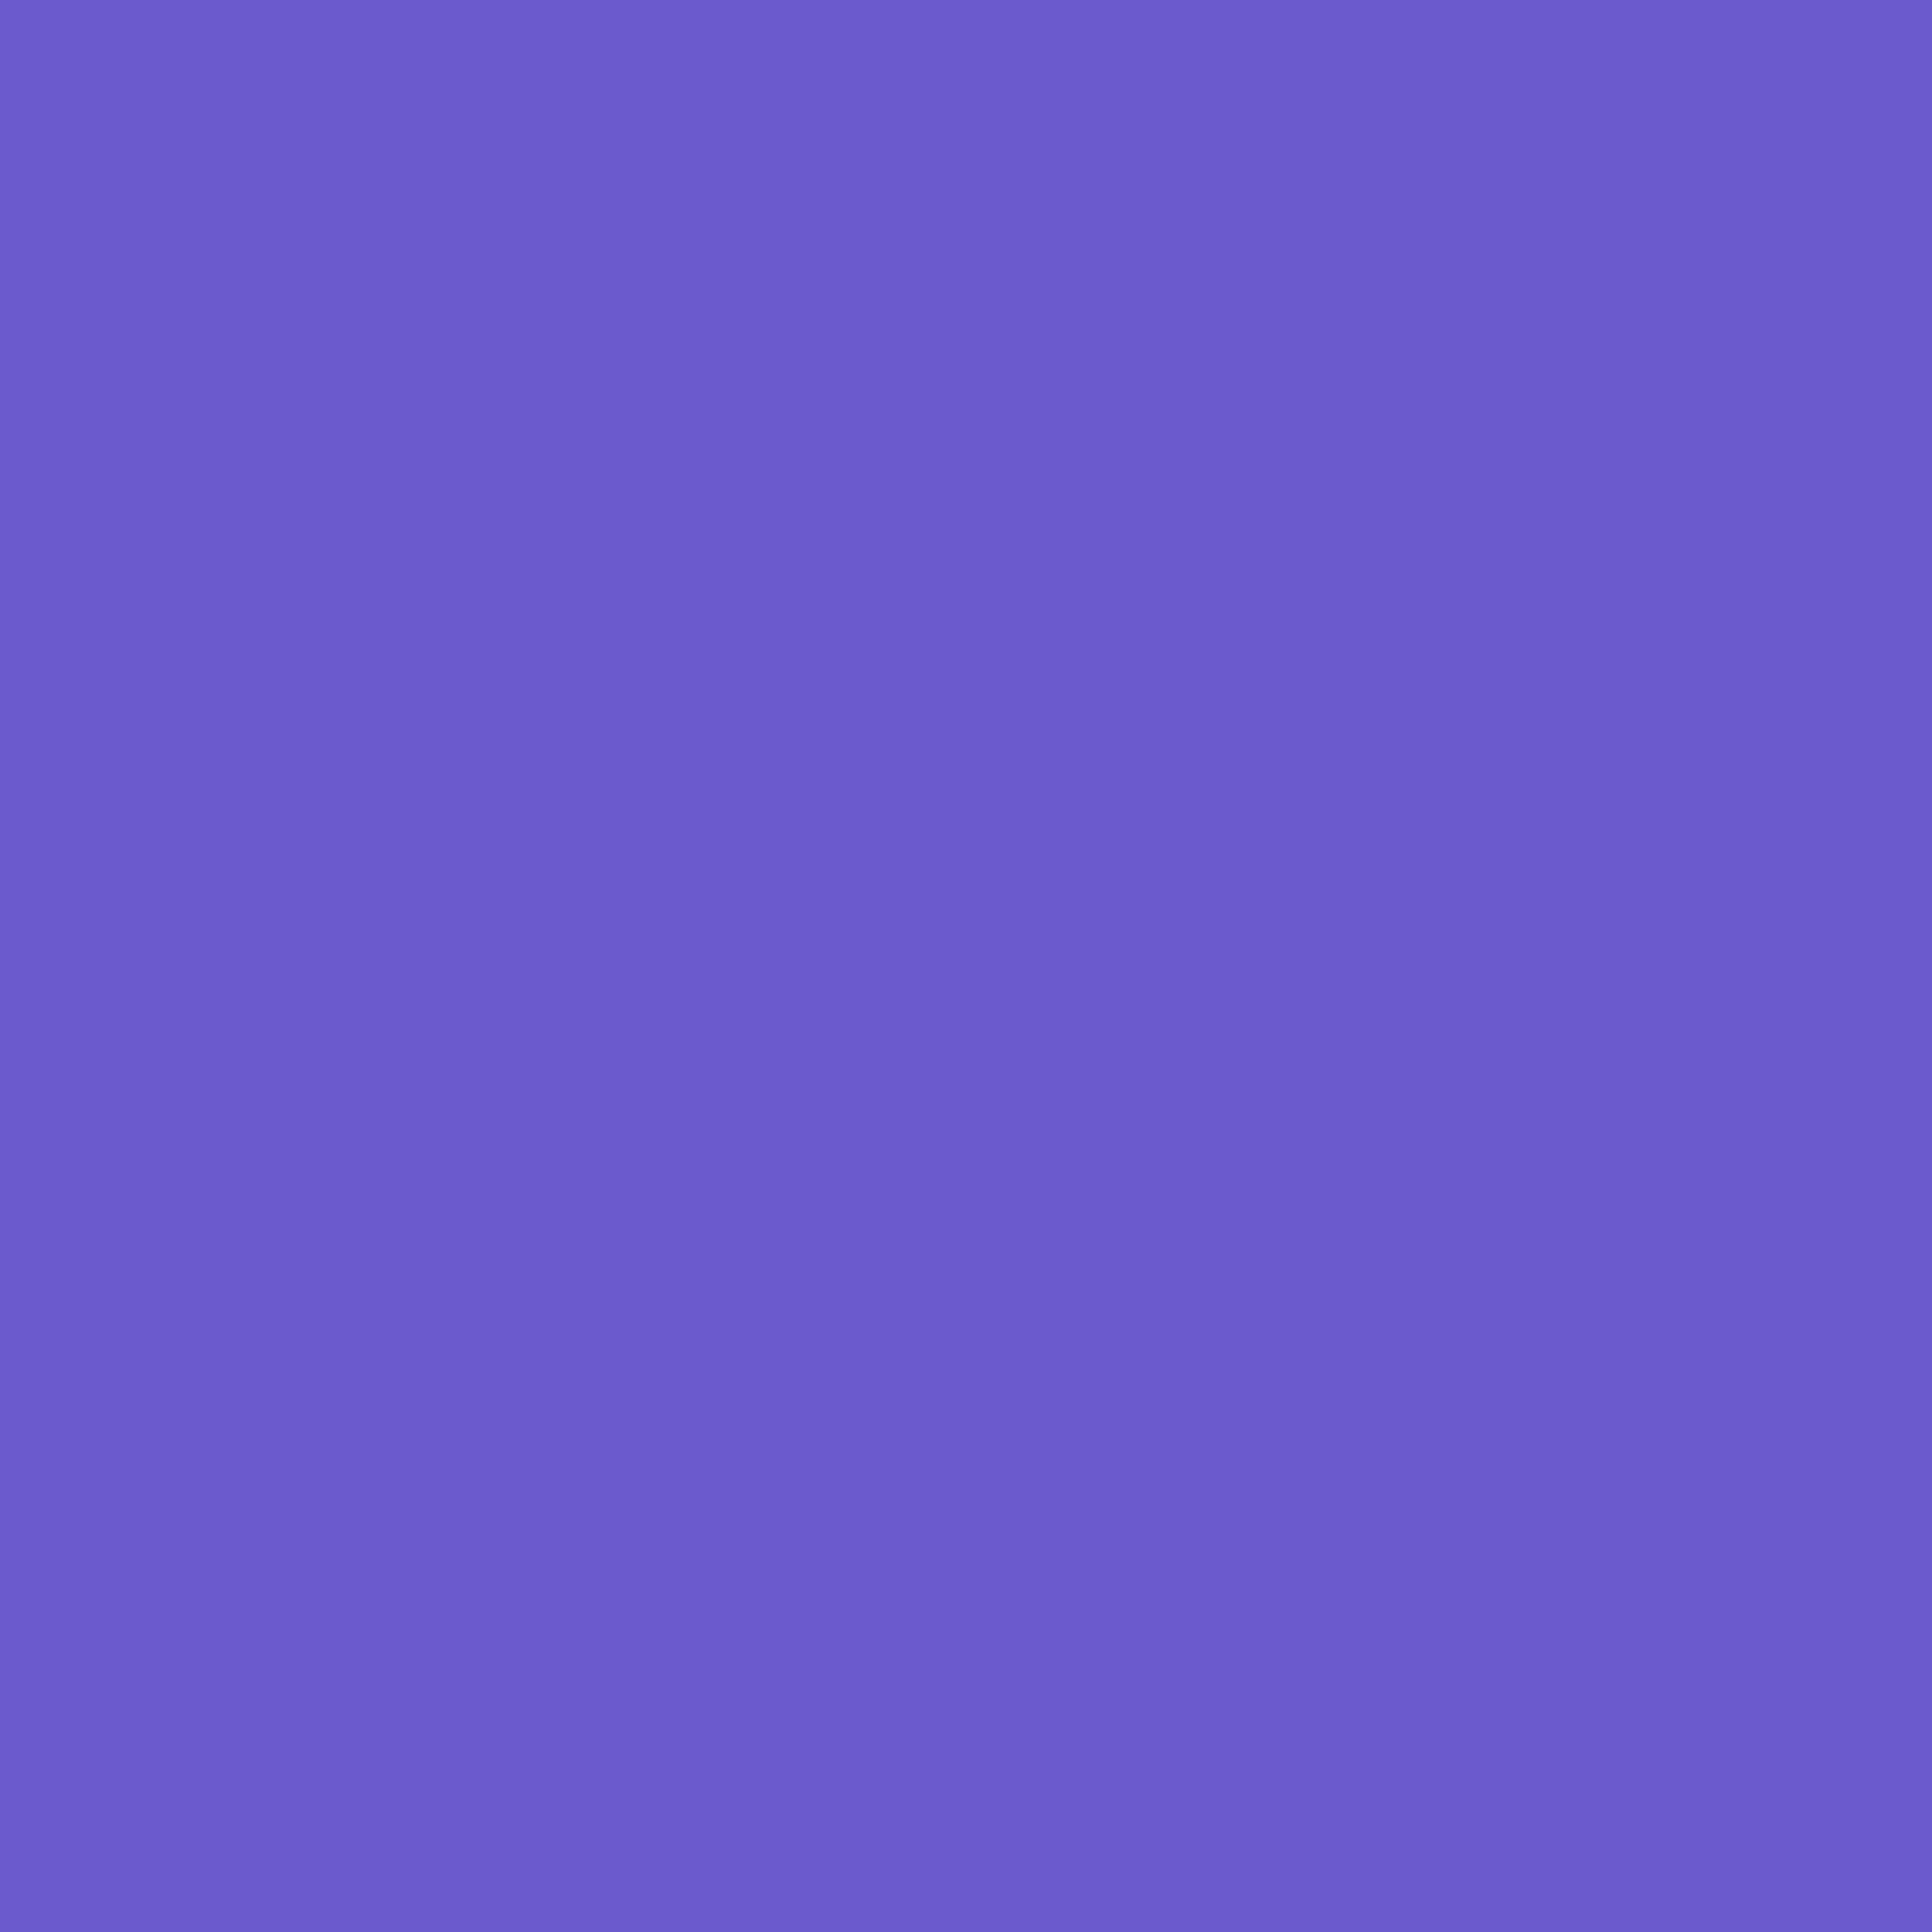 2732x2732 Slate Blue Solid Color Background